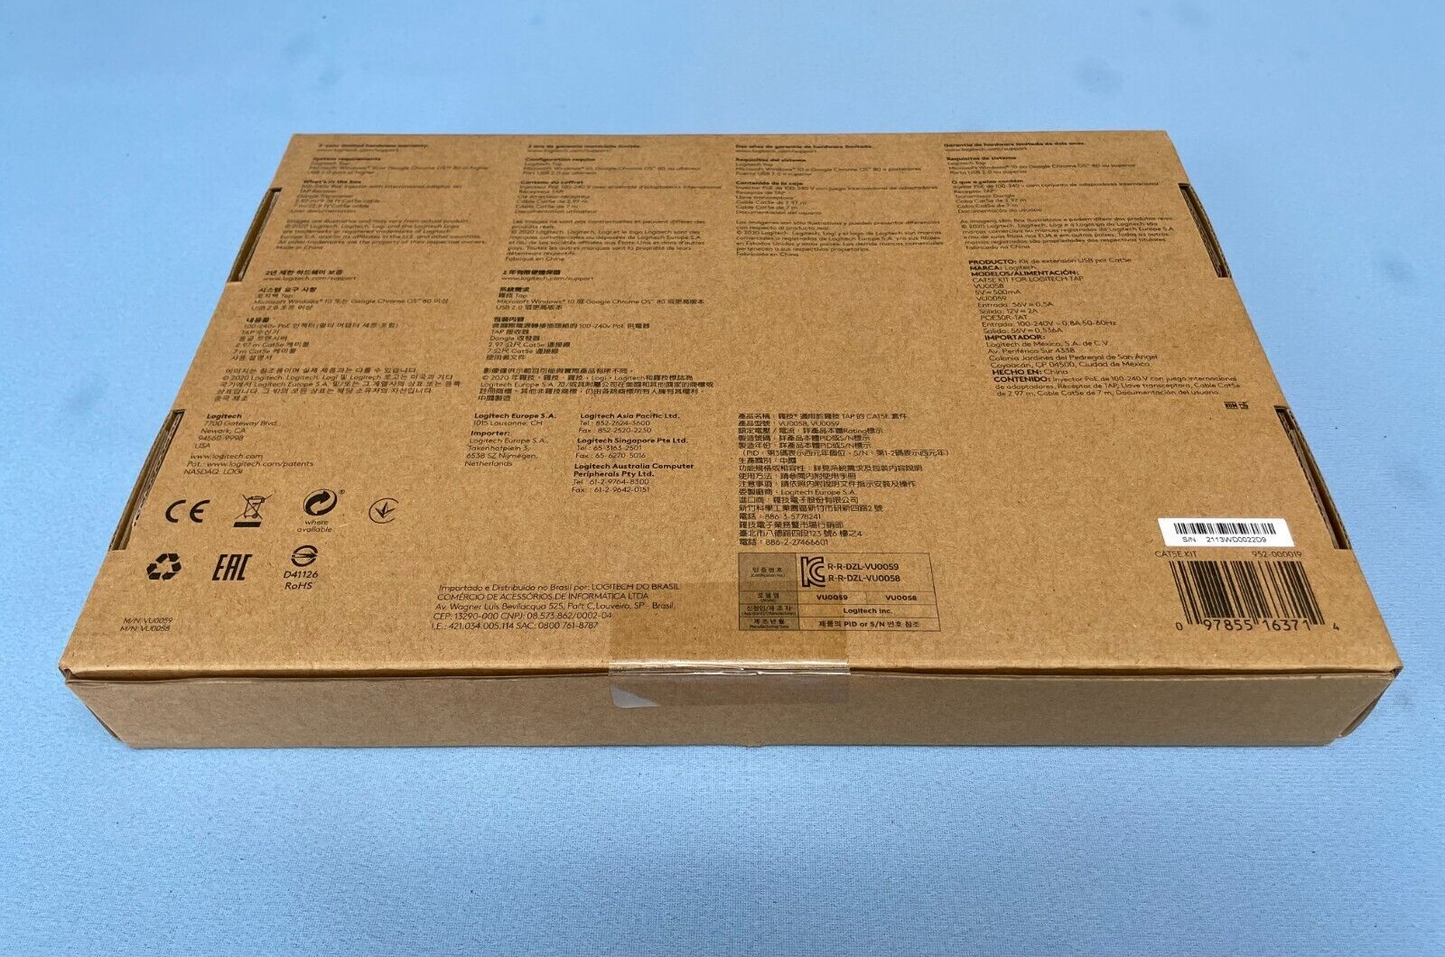 Cat5E Kit for Logitech Tap VU0059 952-000019